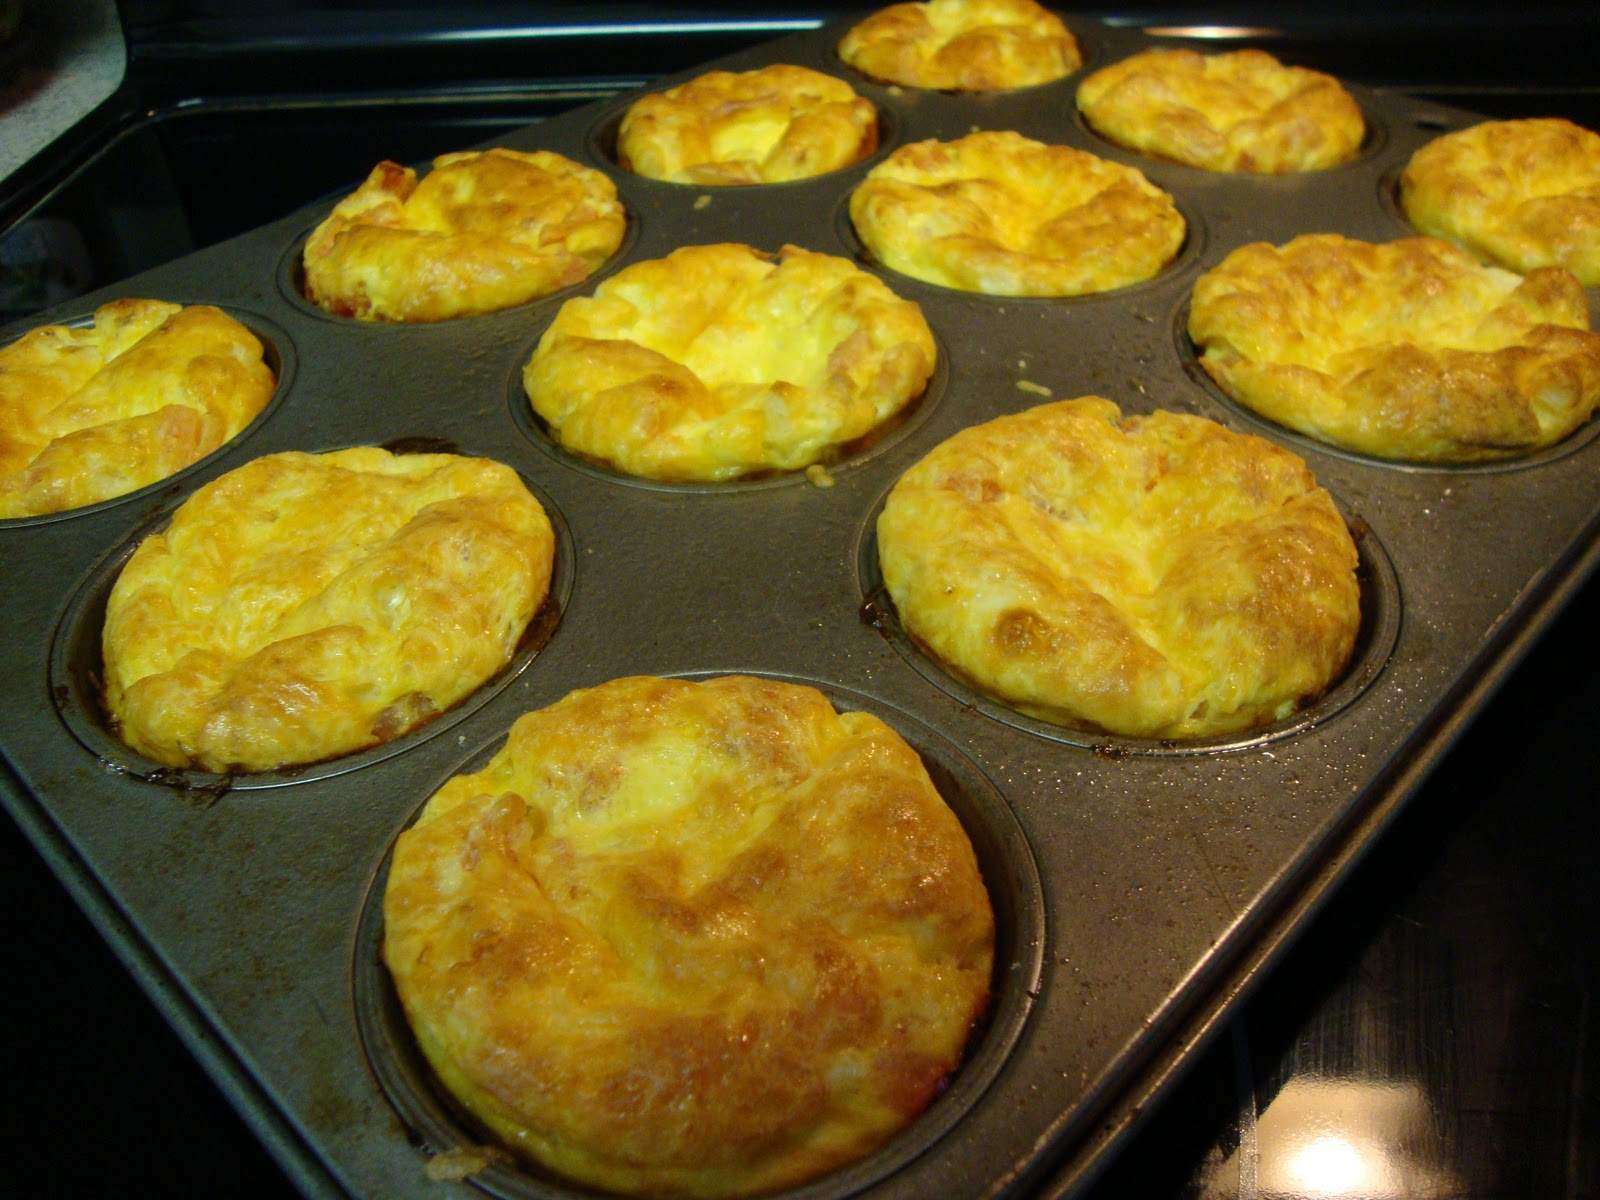 In the Kitchen With Courtney: Crustless Quiche Muffins